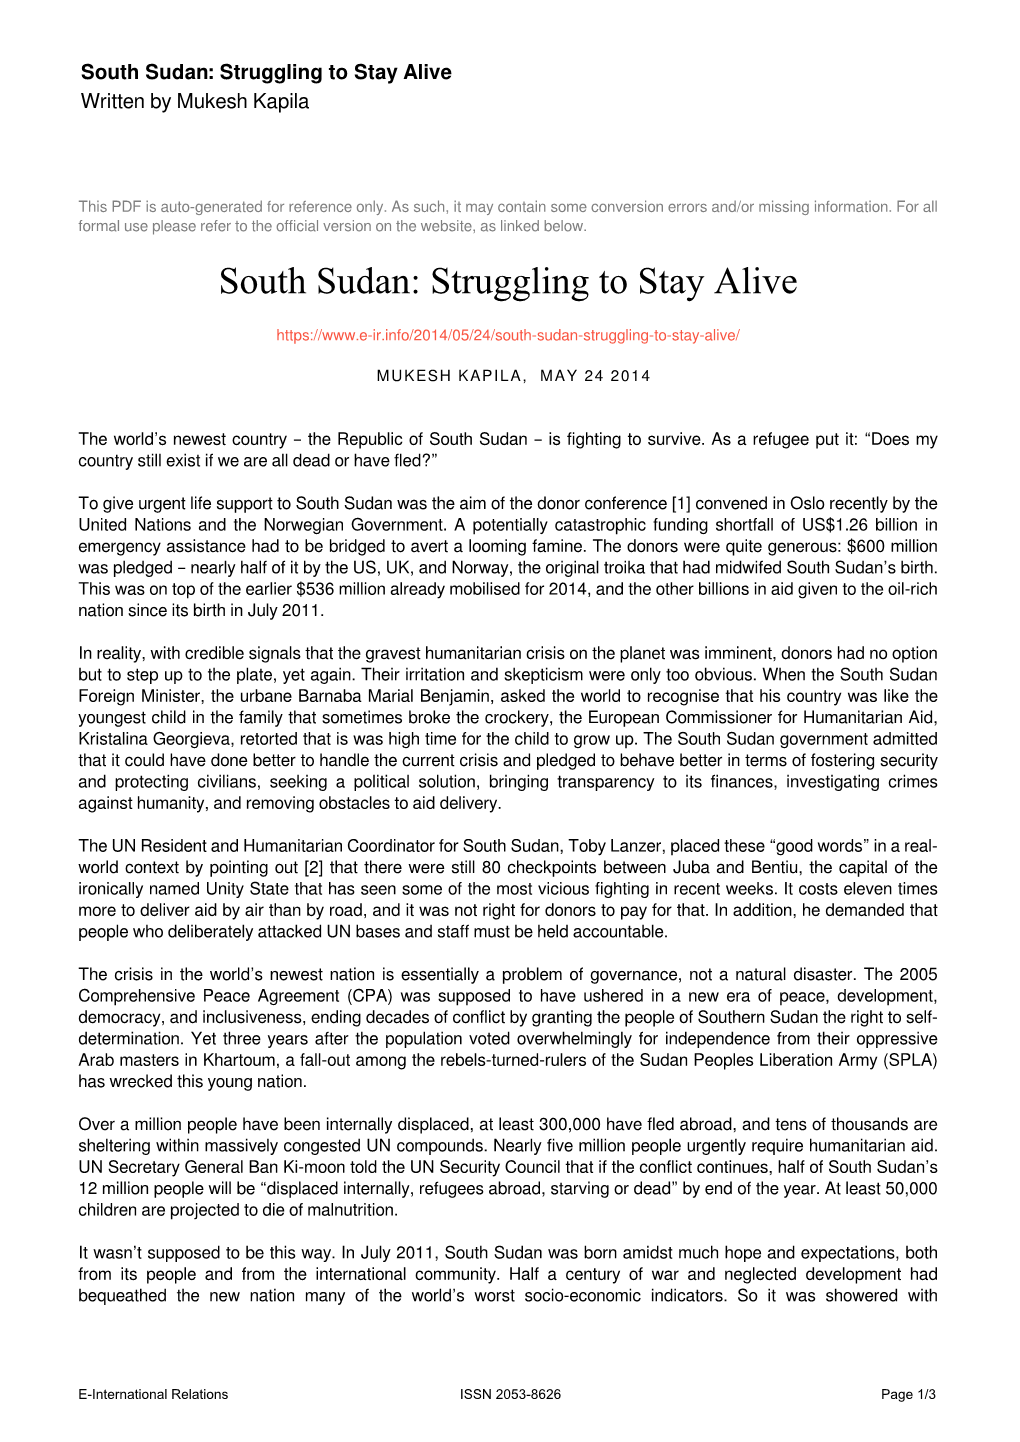 South Sudan: Struggling to Stay Alive Written by Mukesh Kapila